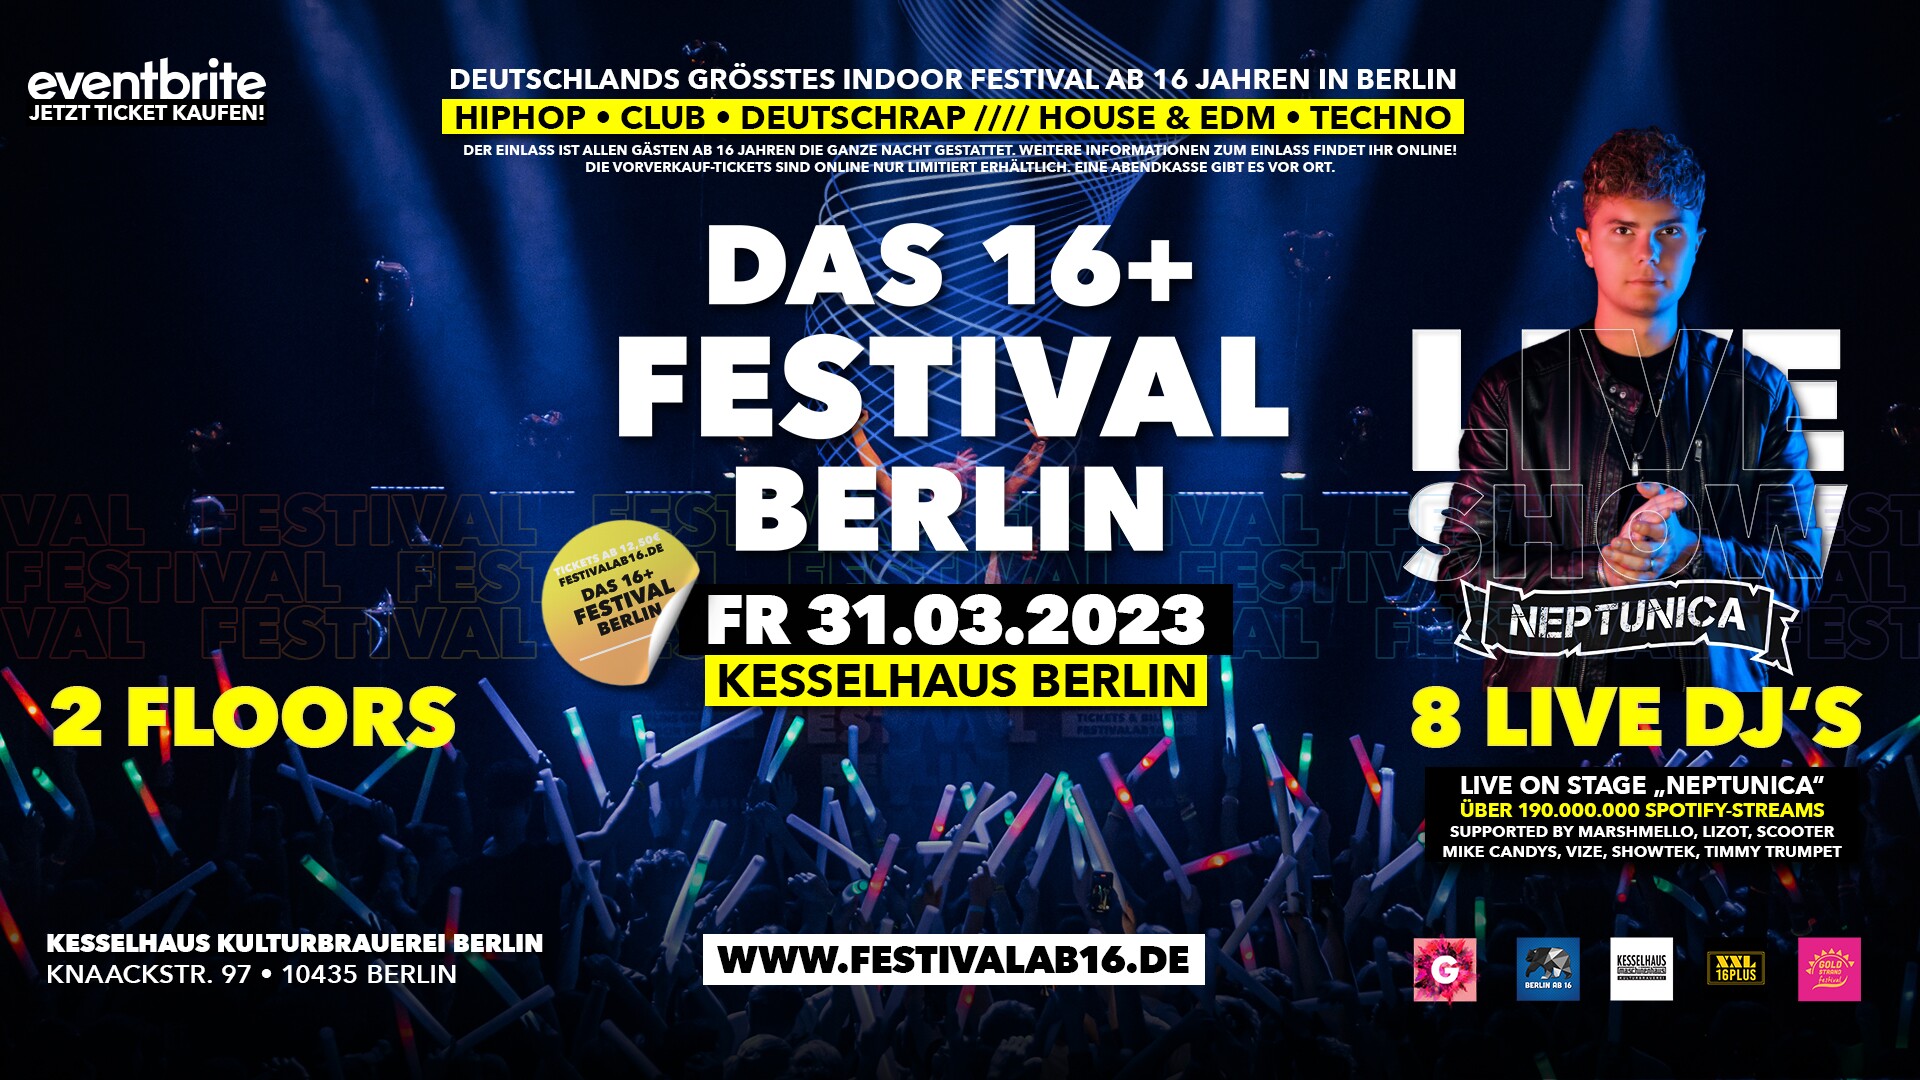 Kesselhaus Berlin Eventflyer #1 vom 31.03.2023